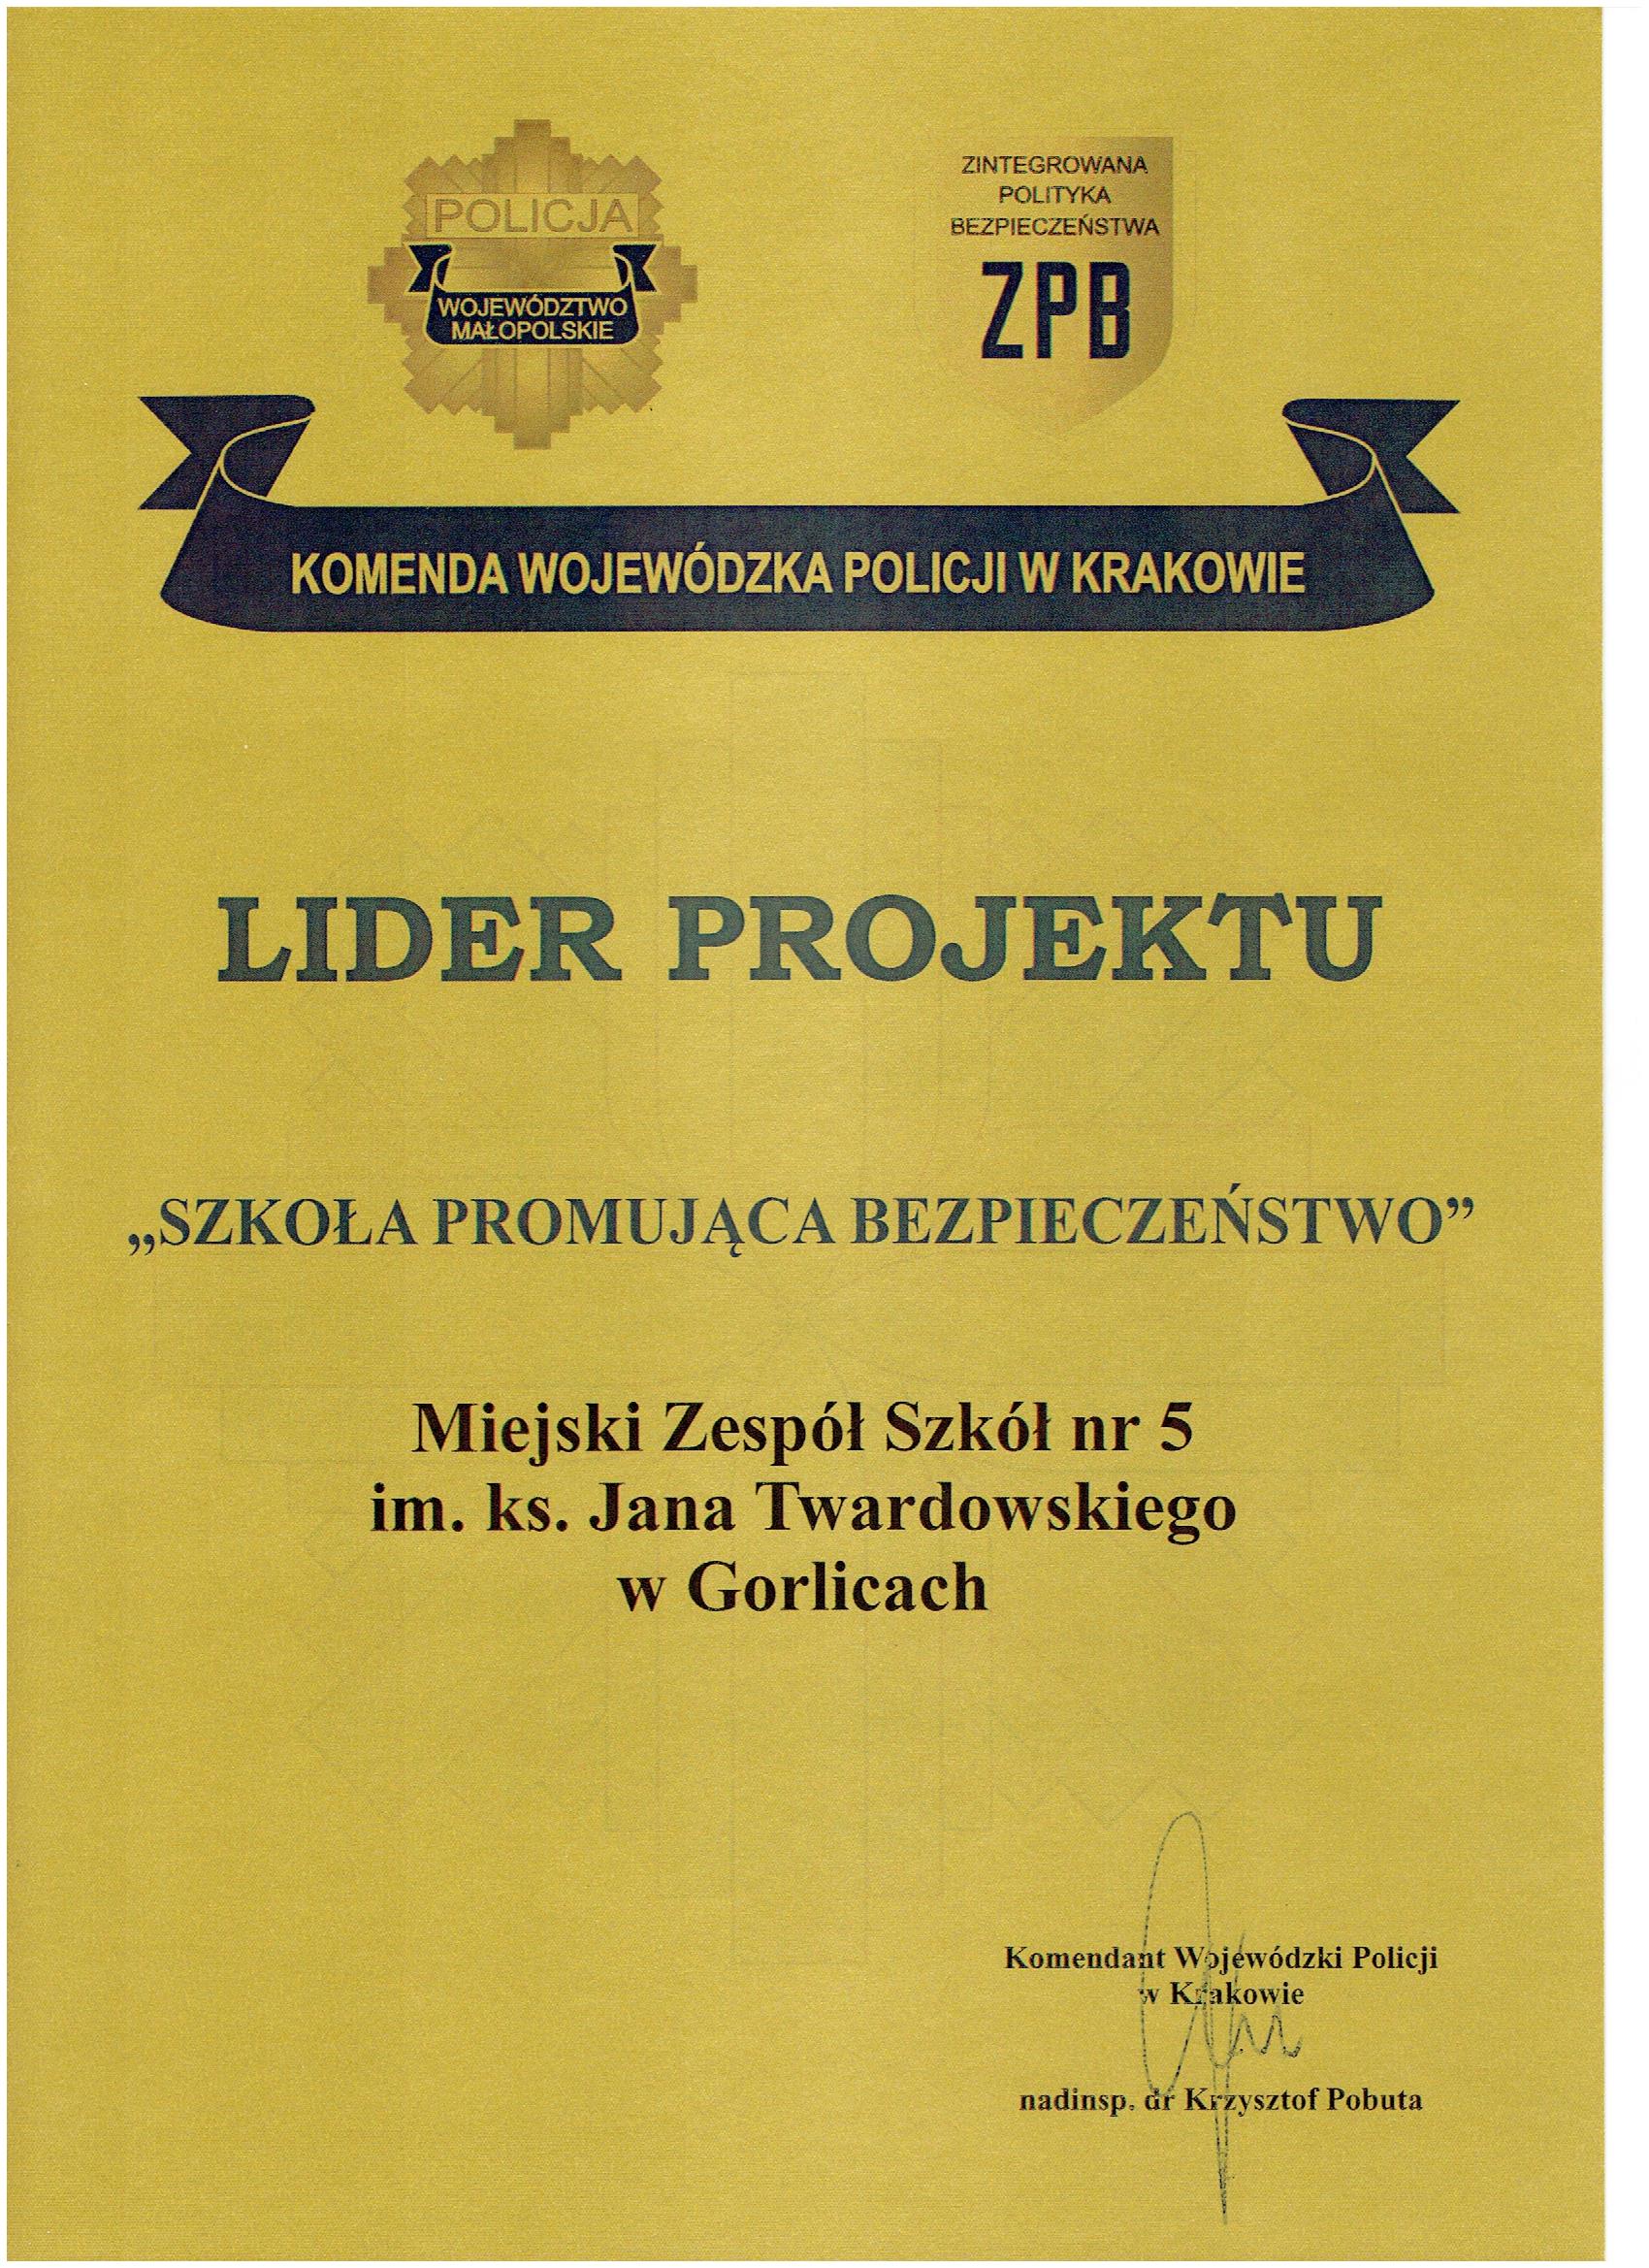 Certyfikat ZPB Lider